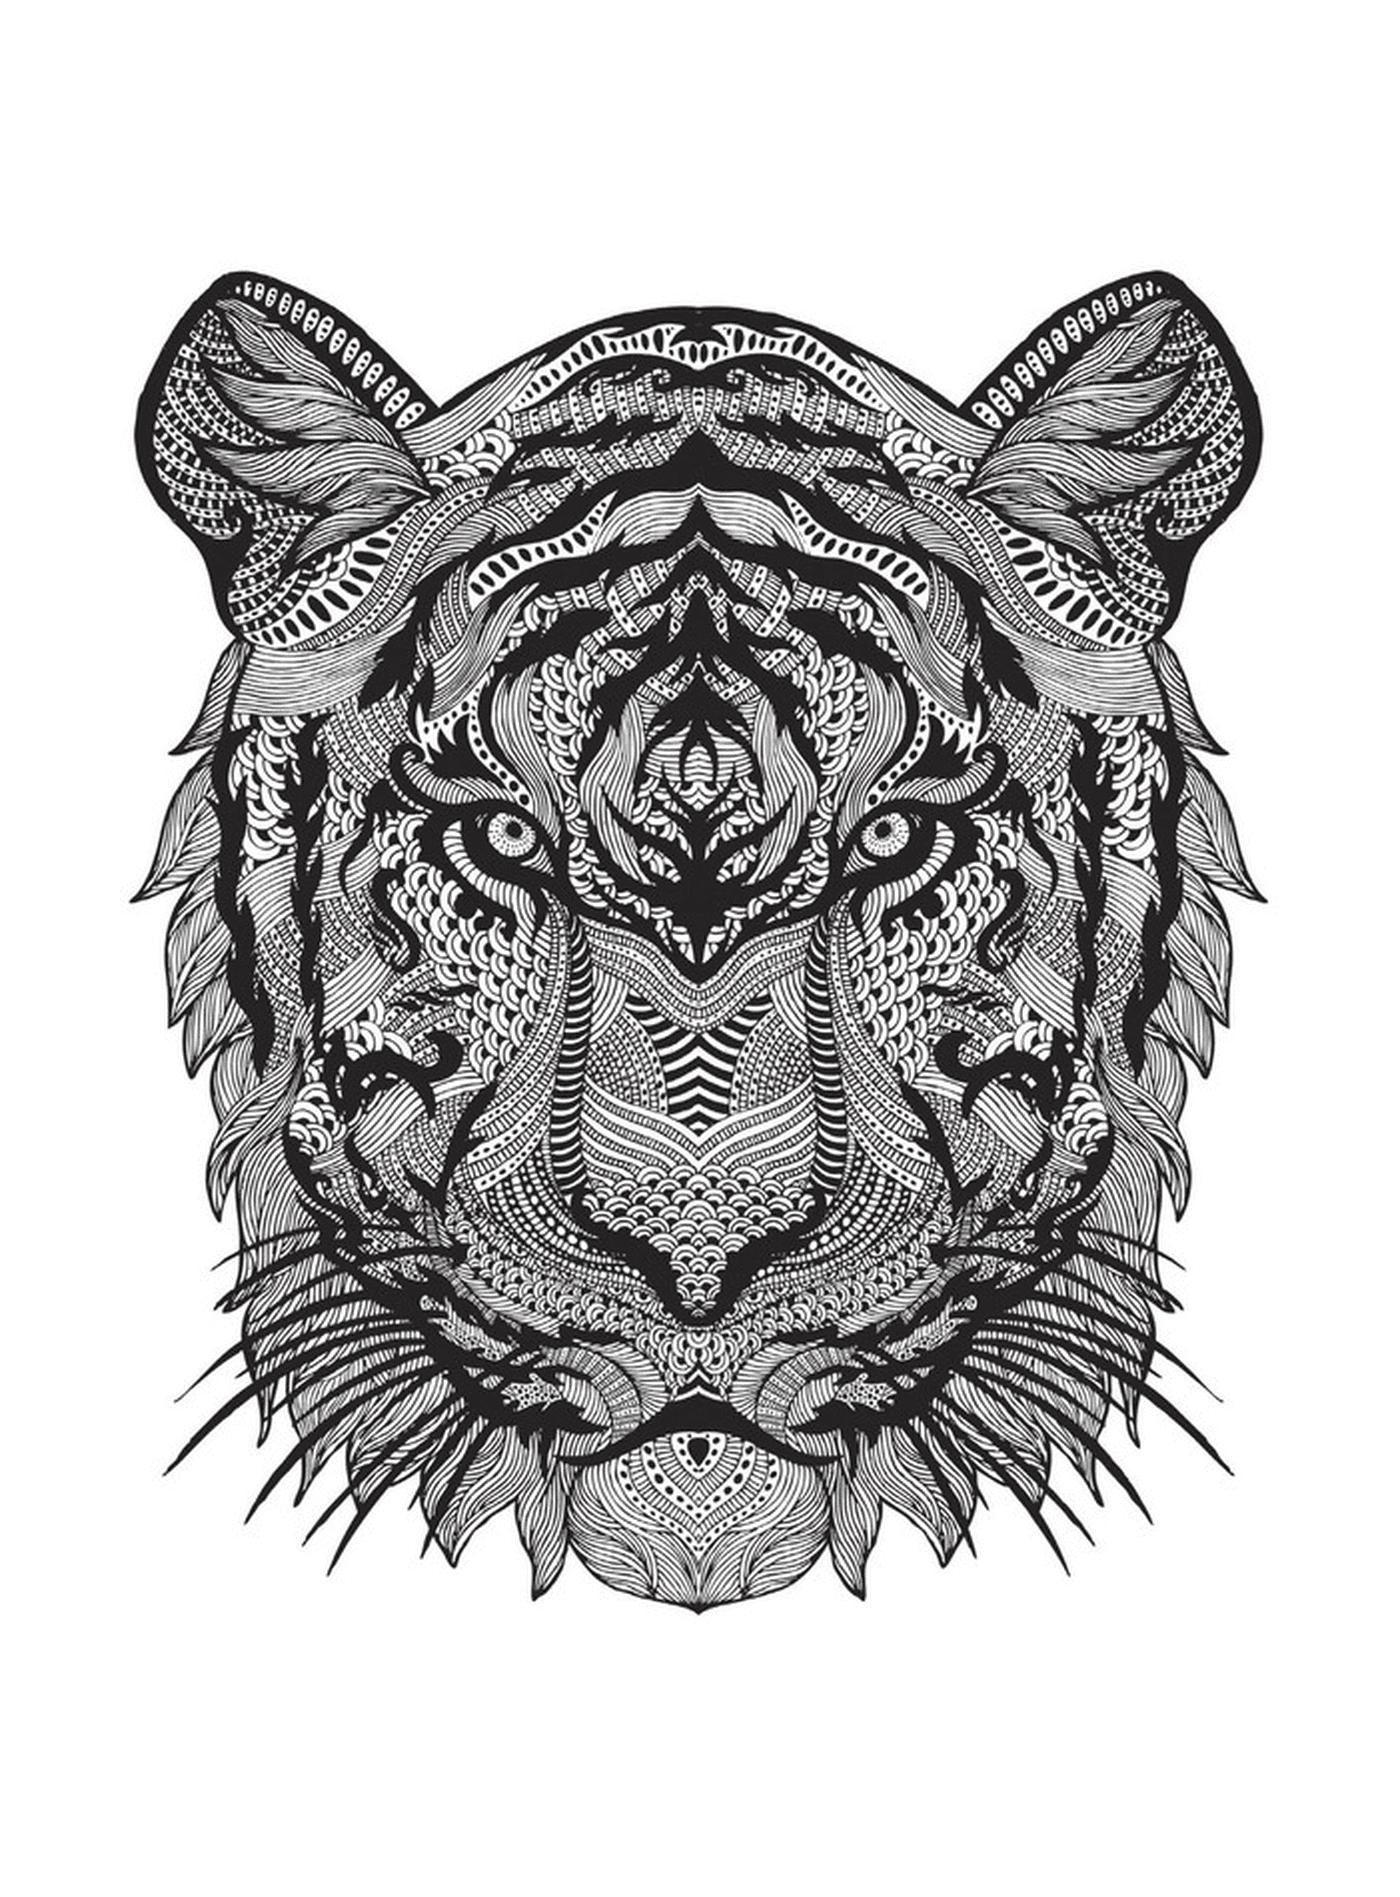   La tête d'un tigre avec des mandalas 